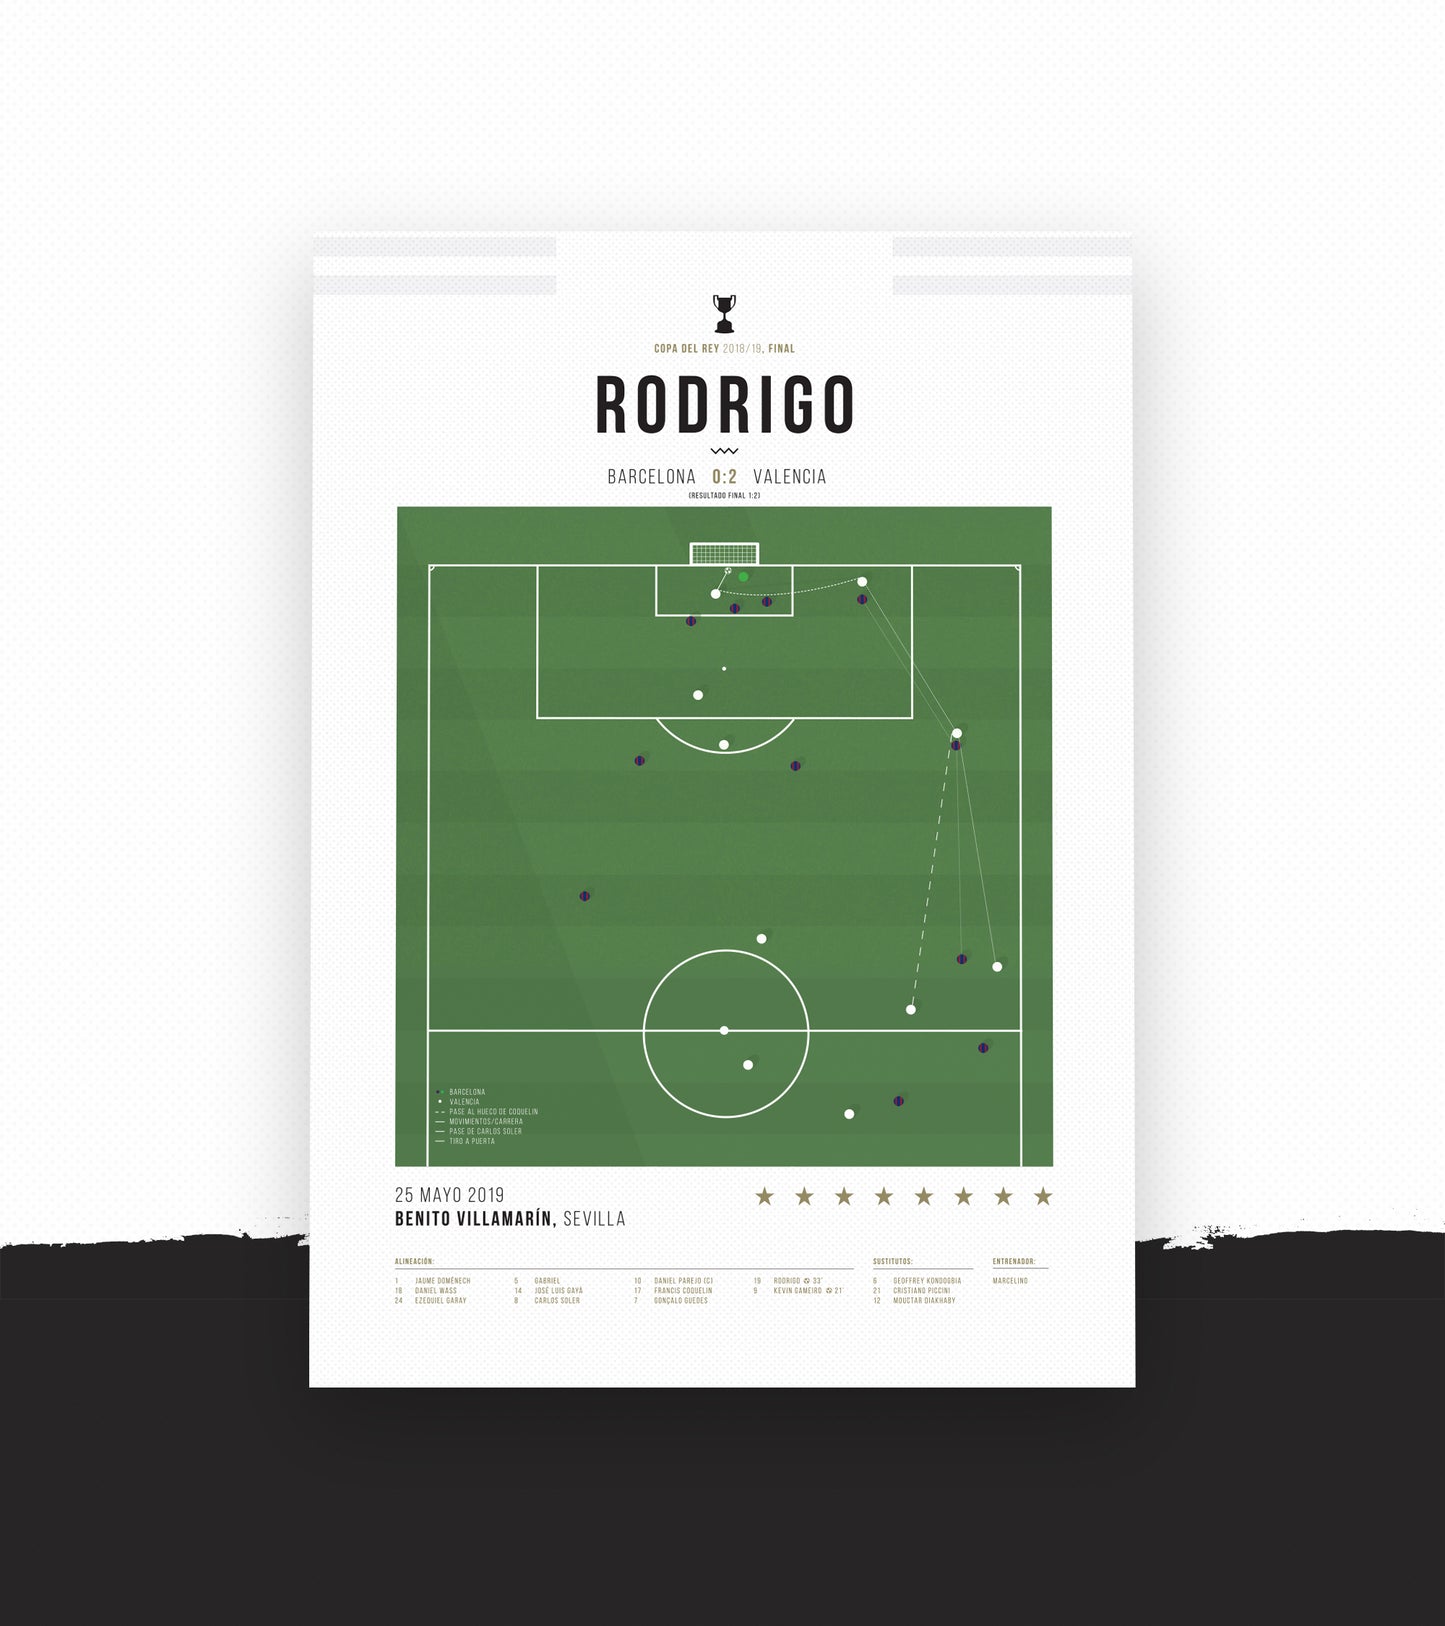 Rodrigo's winner goal in the Cup Final vs Barcelona